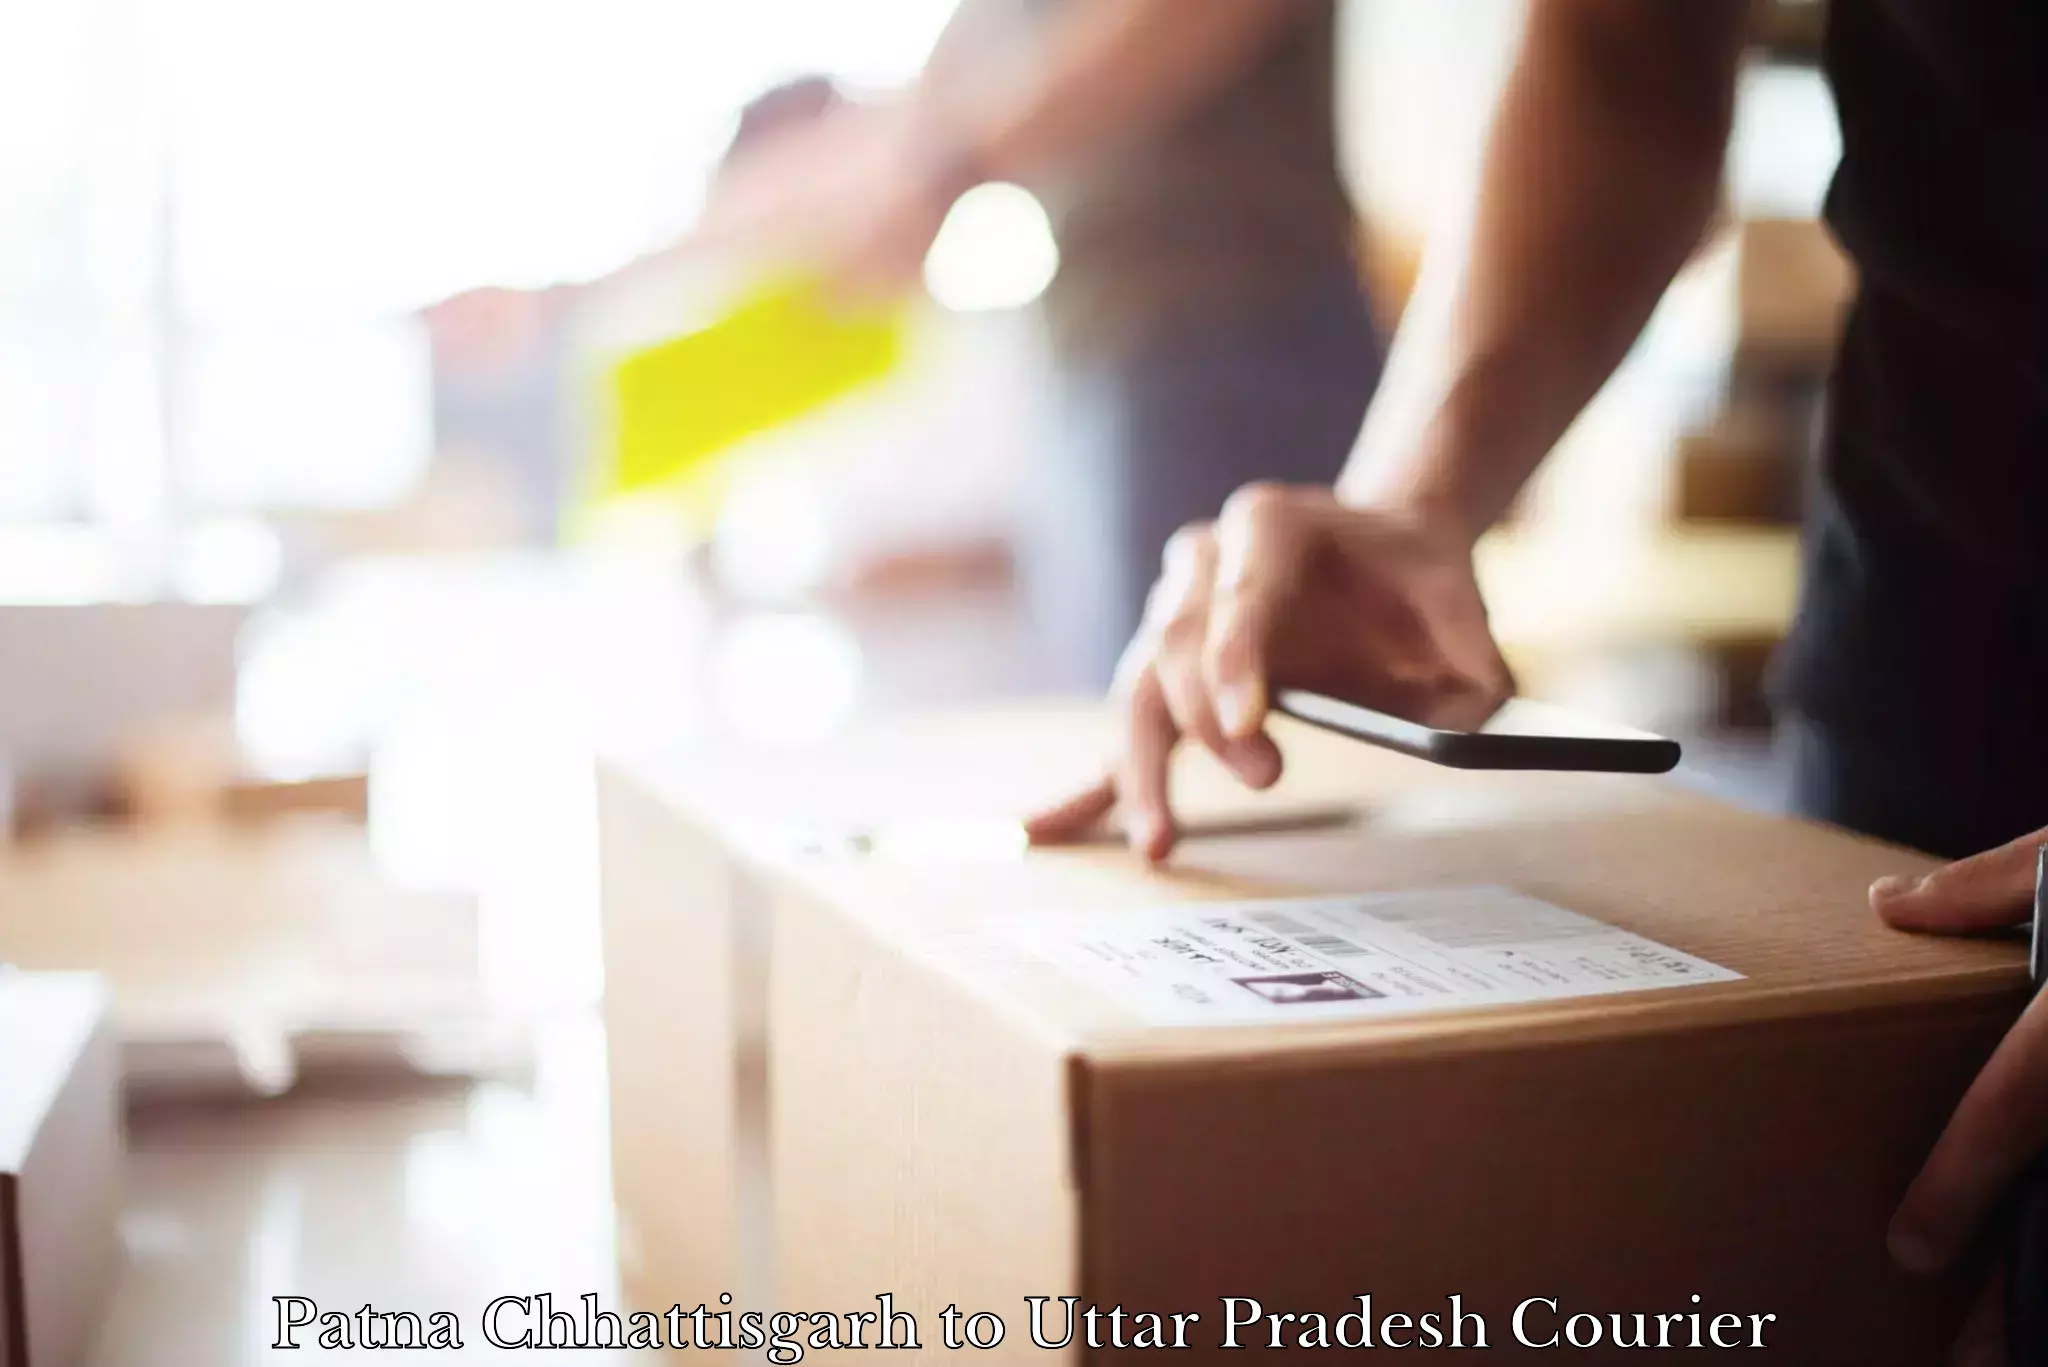 Sustainable courier practices Patna Chhattisgarh to Rampur Maniharan